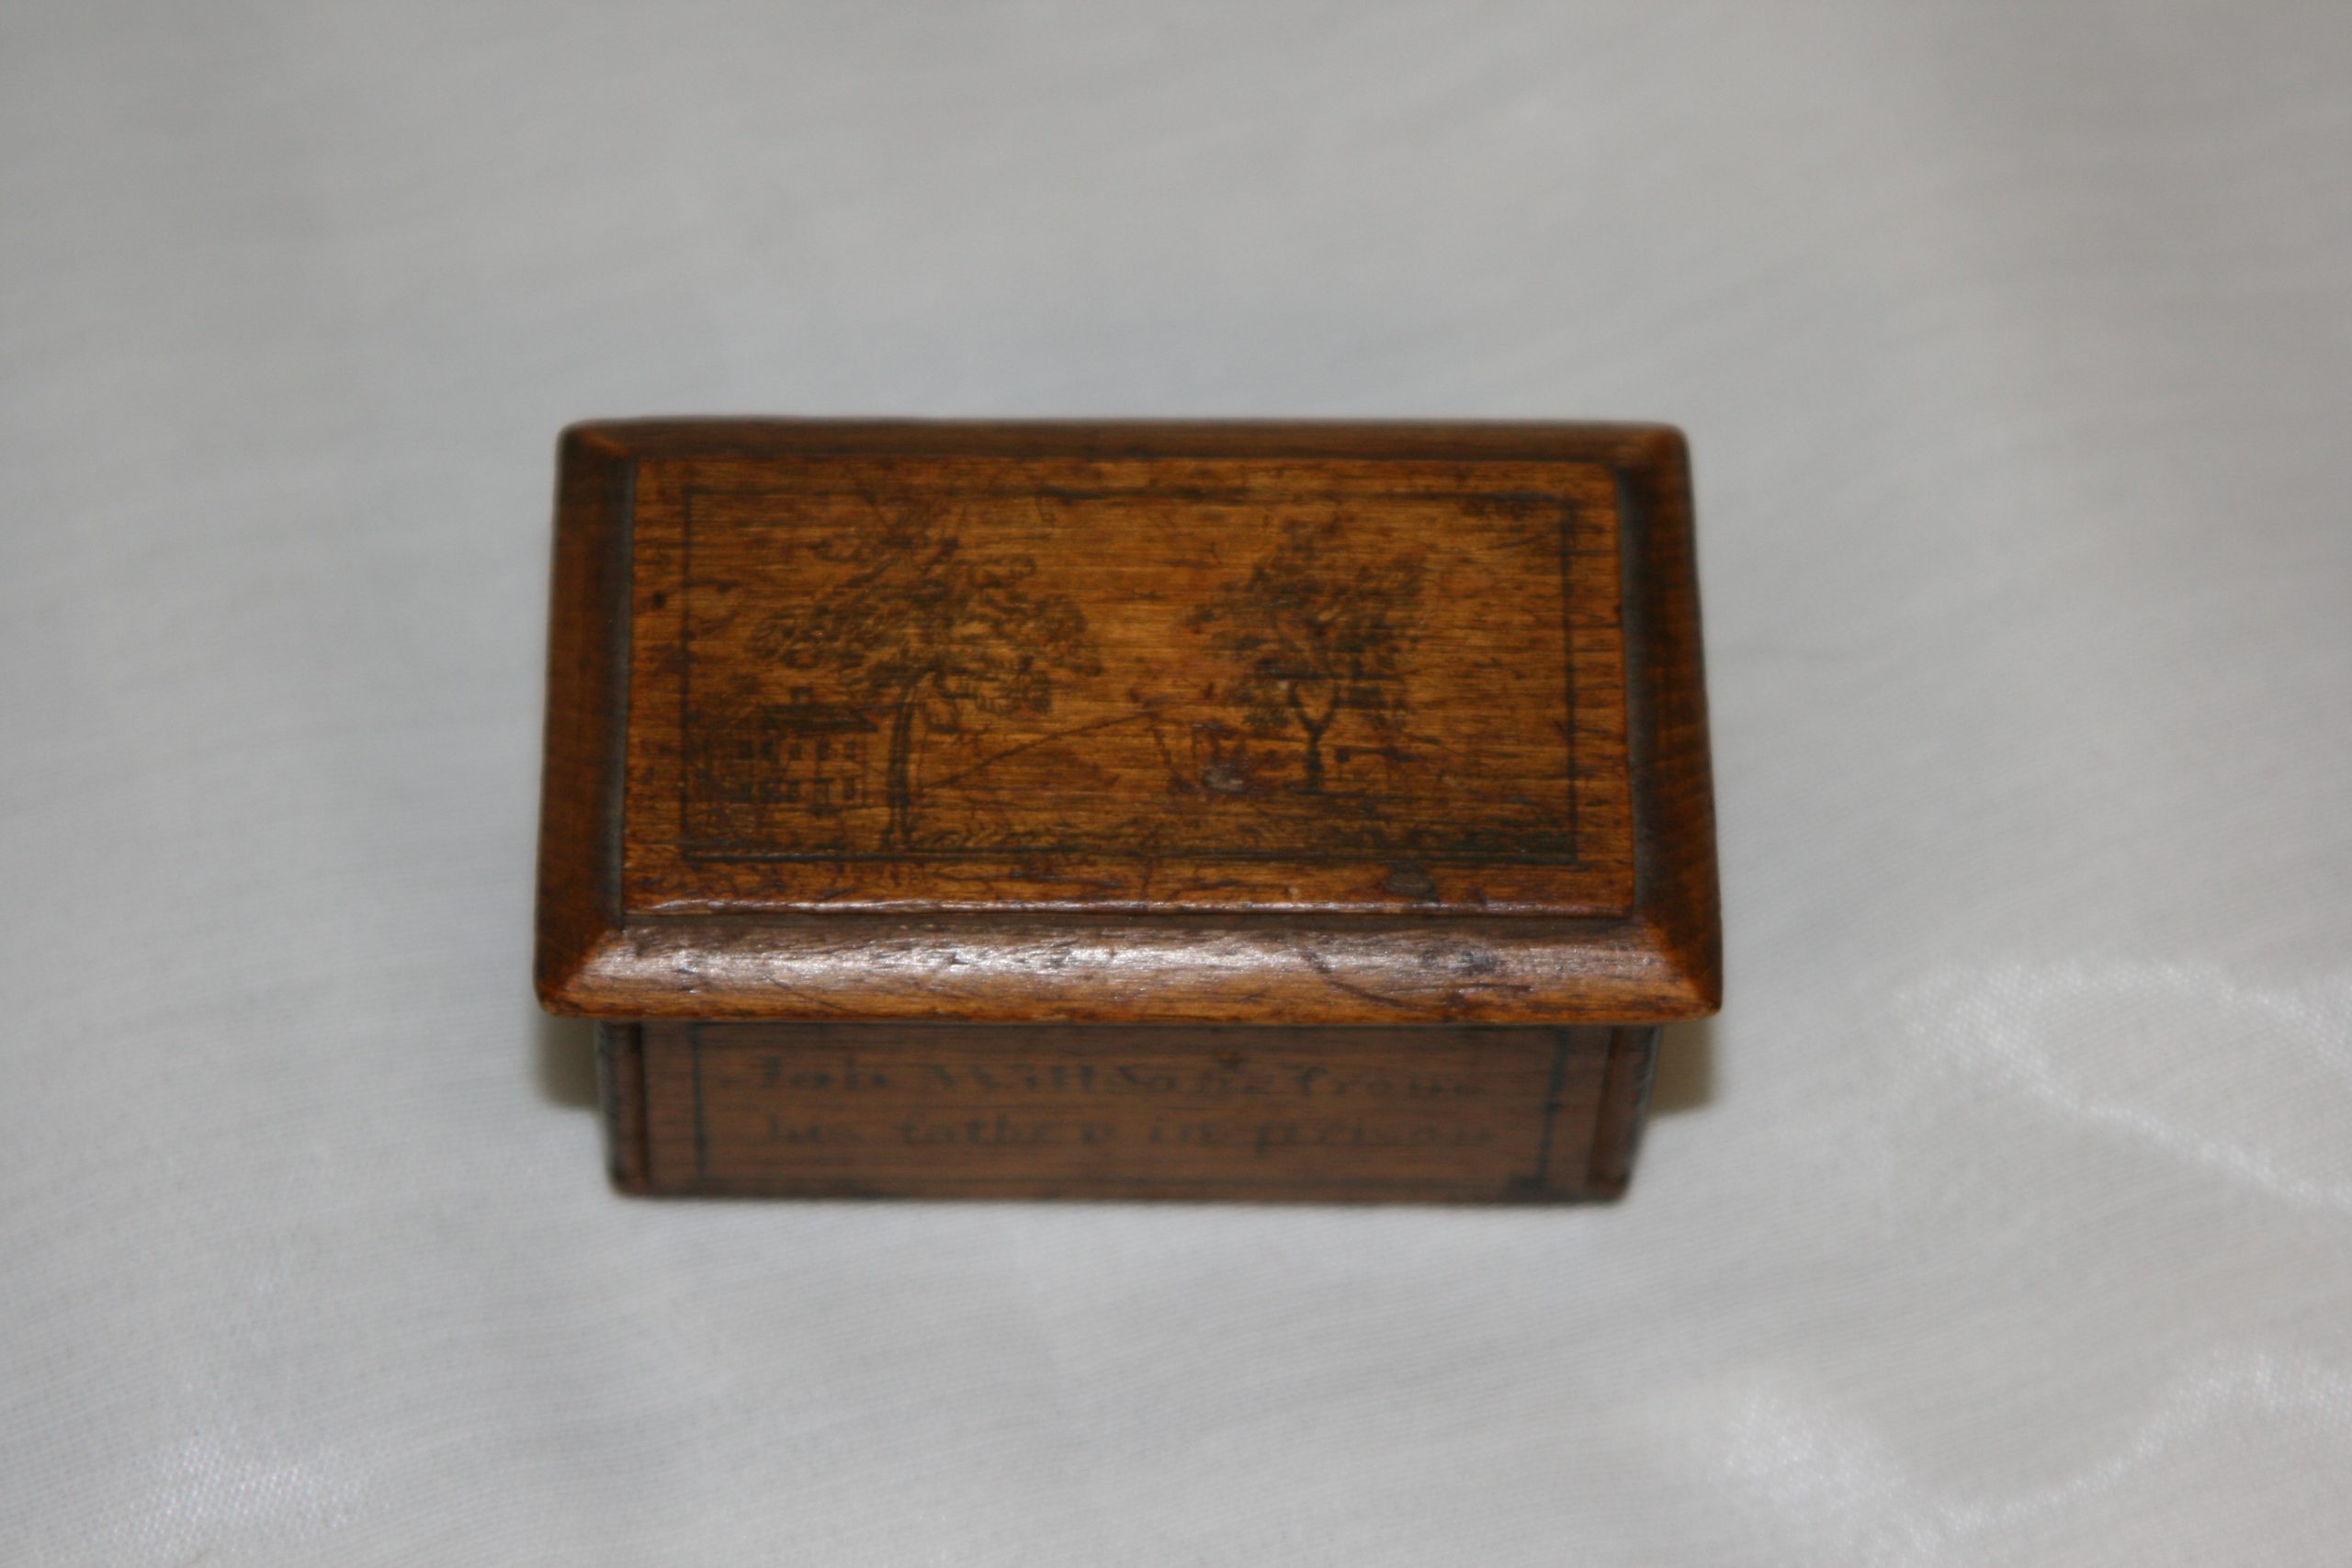 Small rebellion box made by John David Willson for his son, Job Willson.